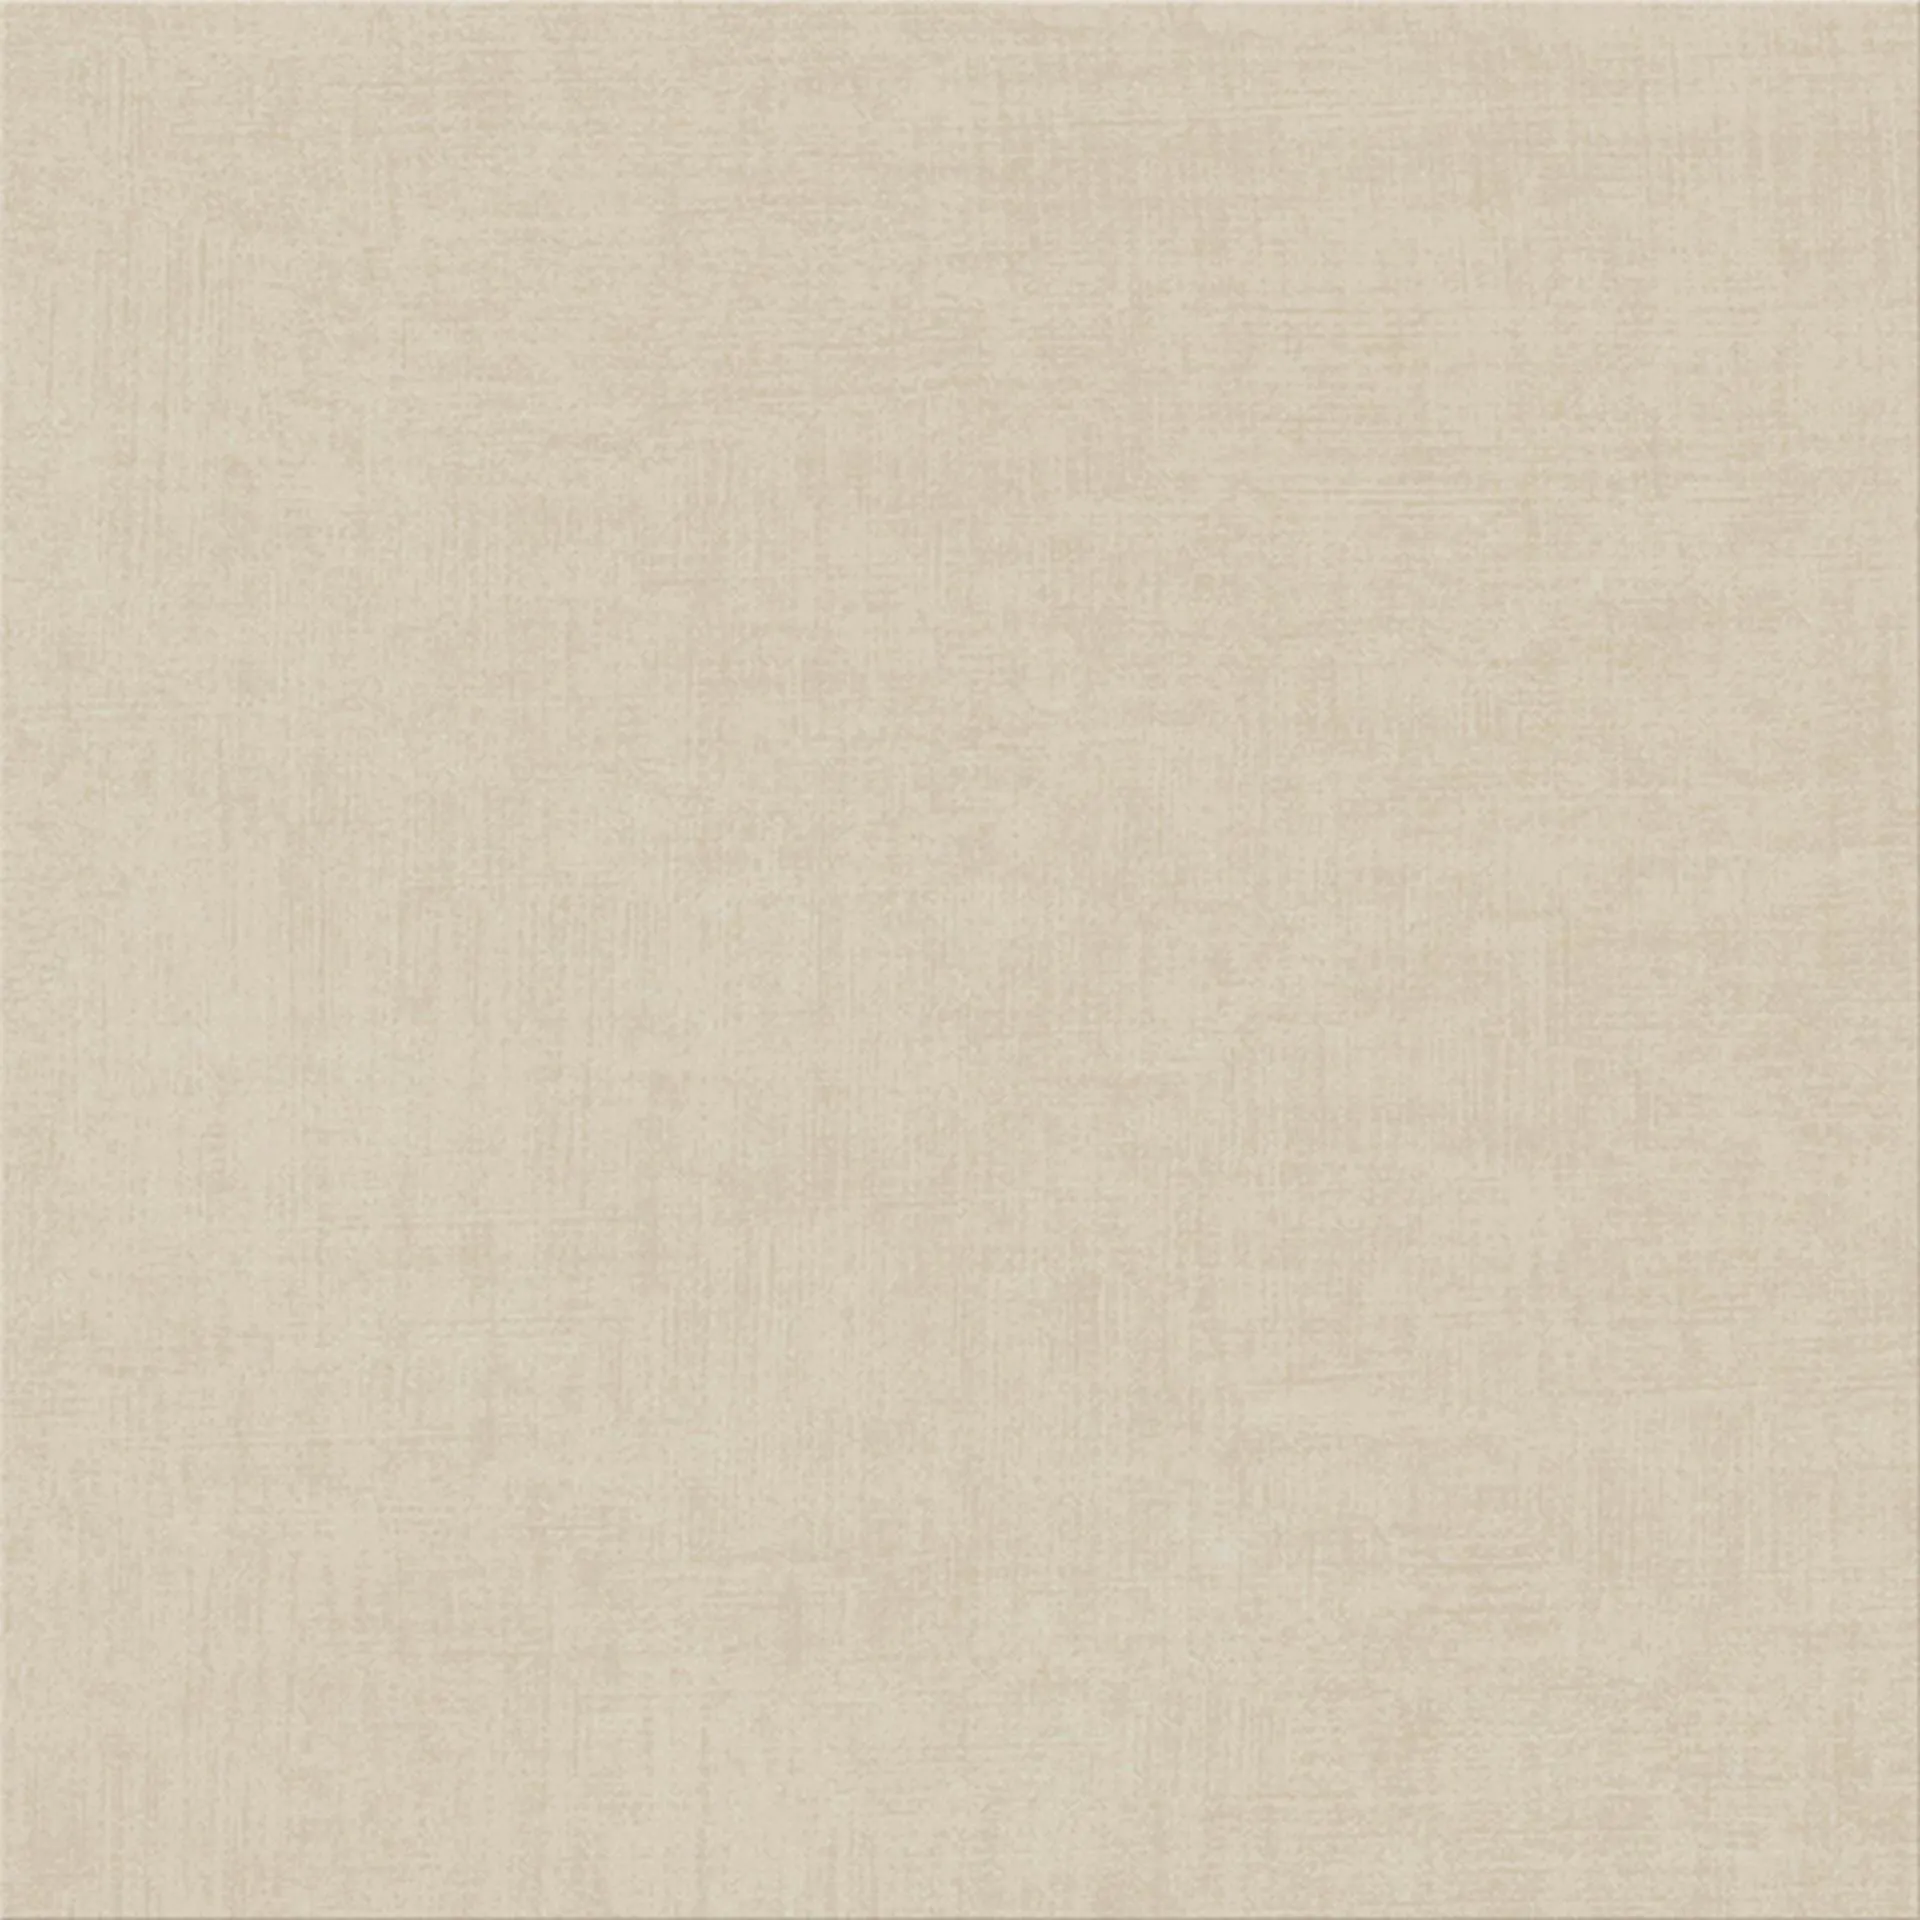 Gres Shiny Textile g440 beige satin 42x42 Cersanit